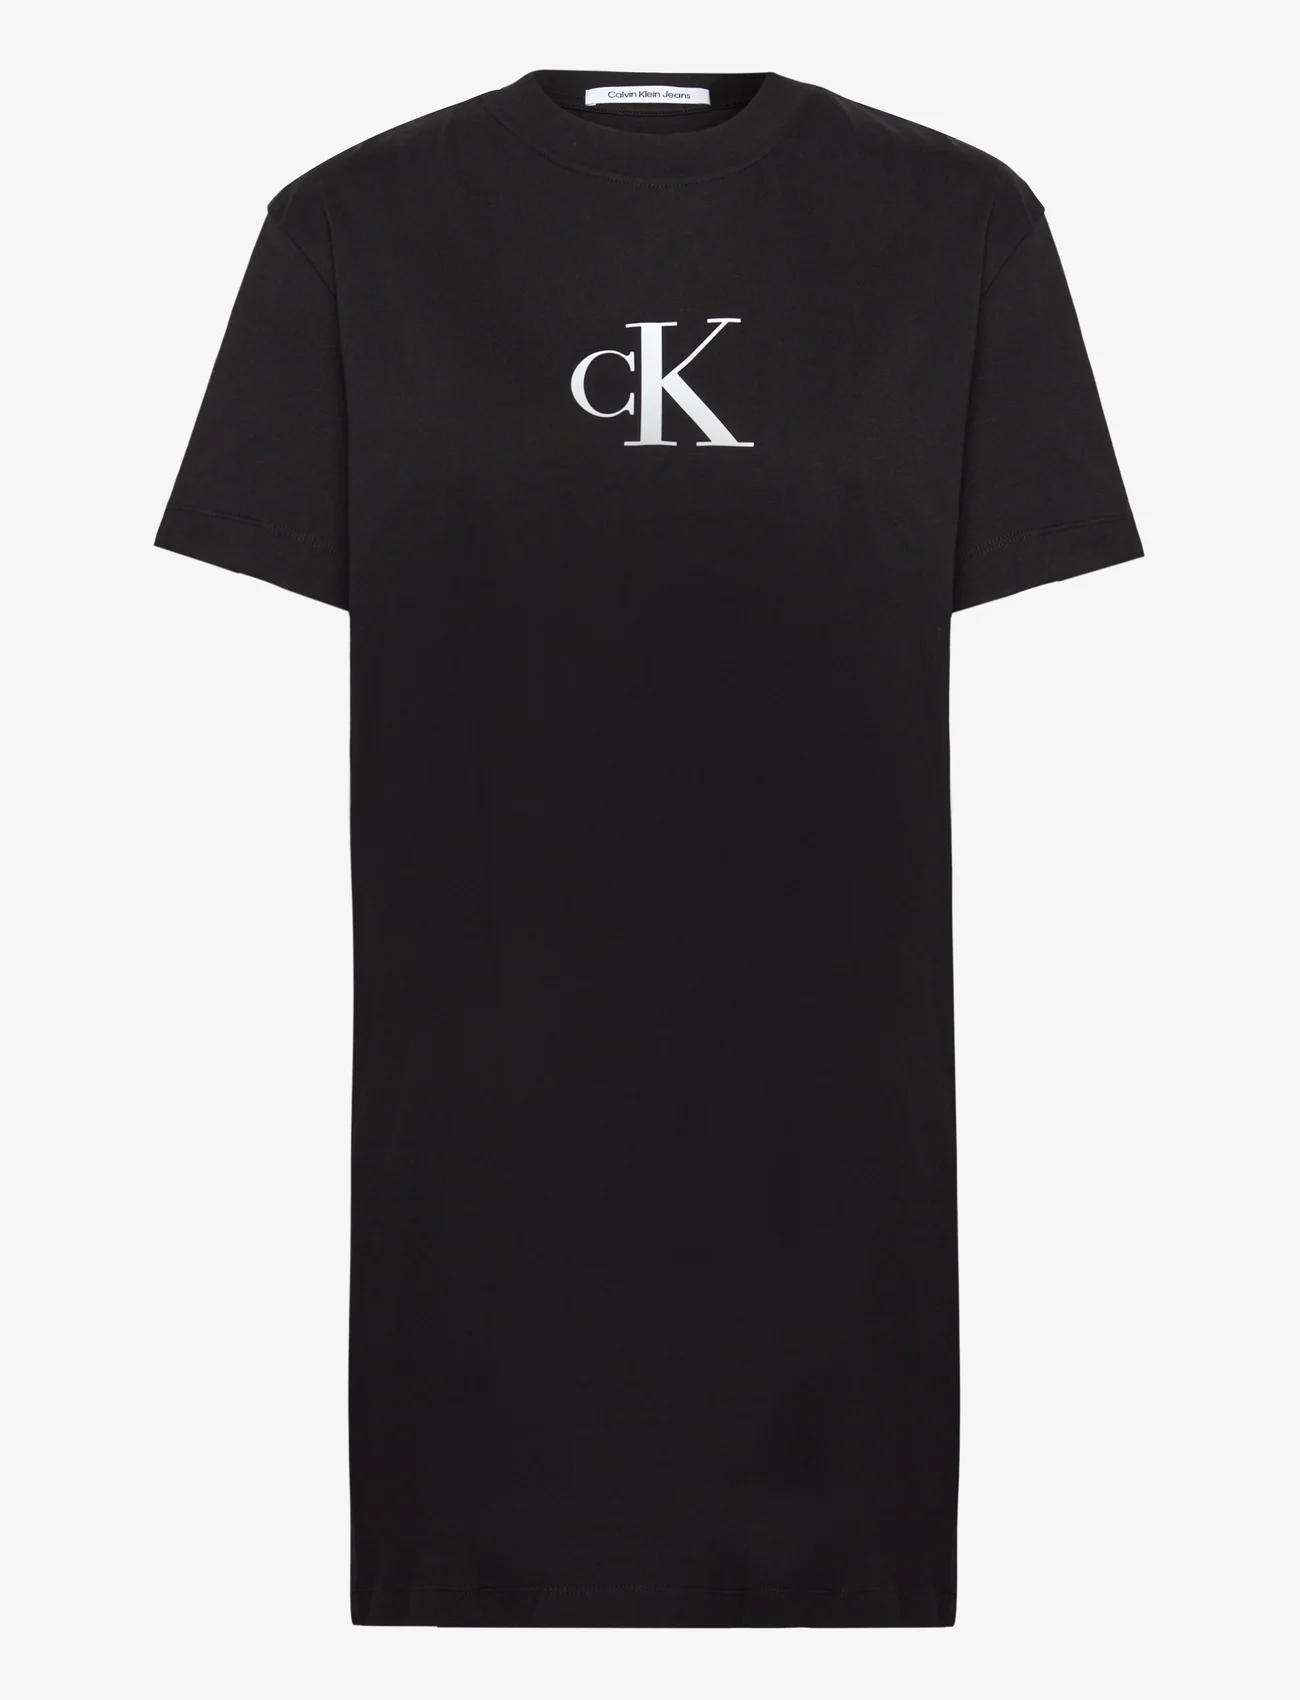 Calvin Klein Jeans - SATIN CK T-SHIRT DRESS - t-kreklu kleitas - ck black - 0